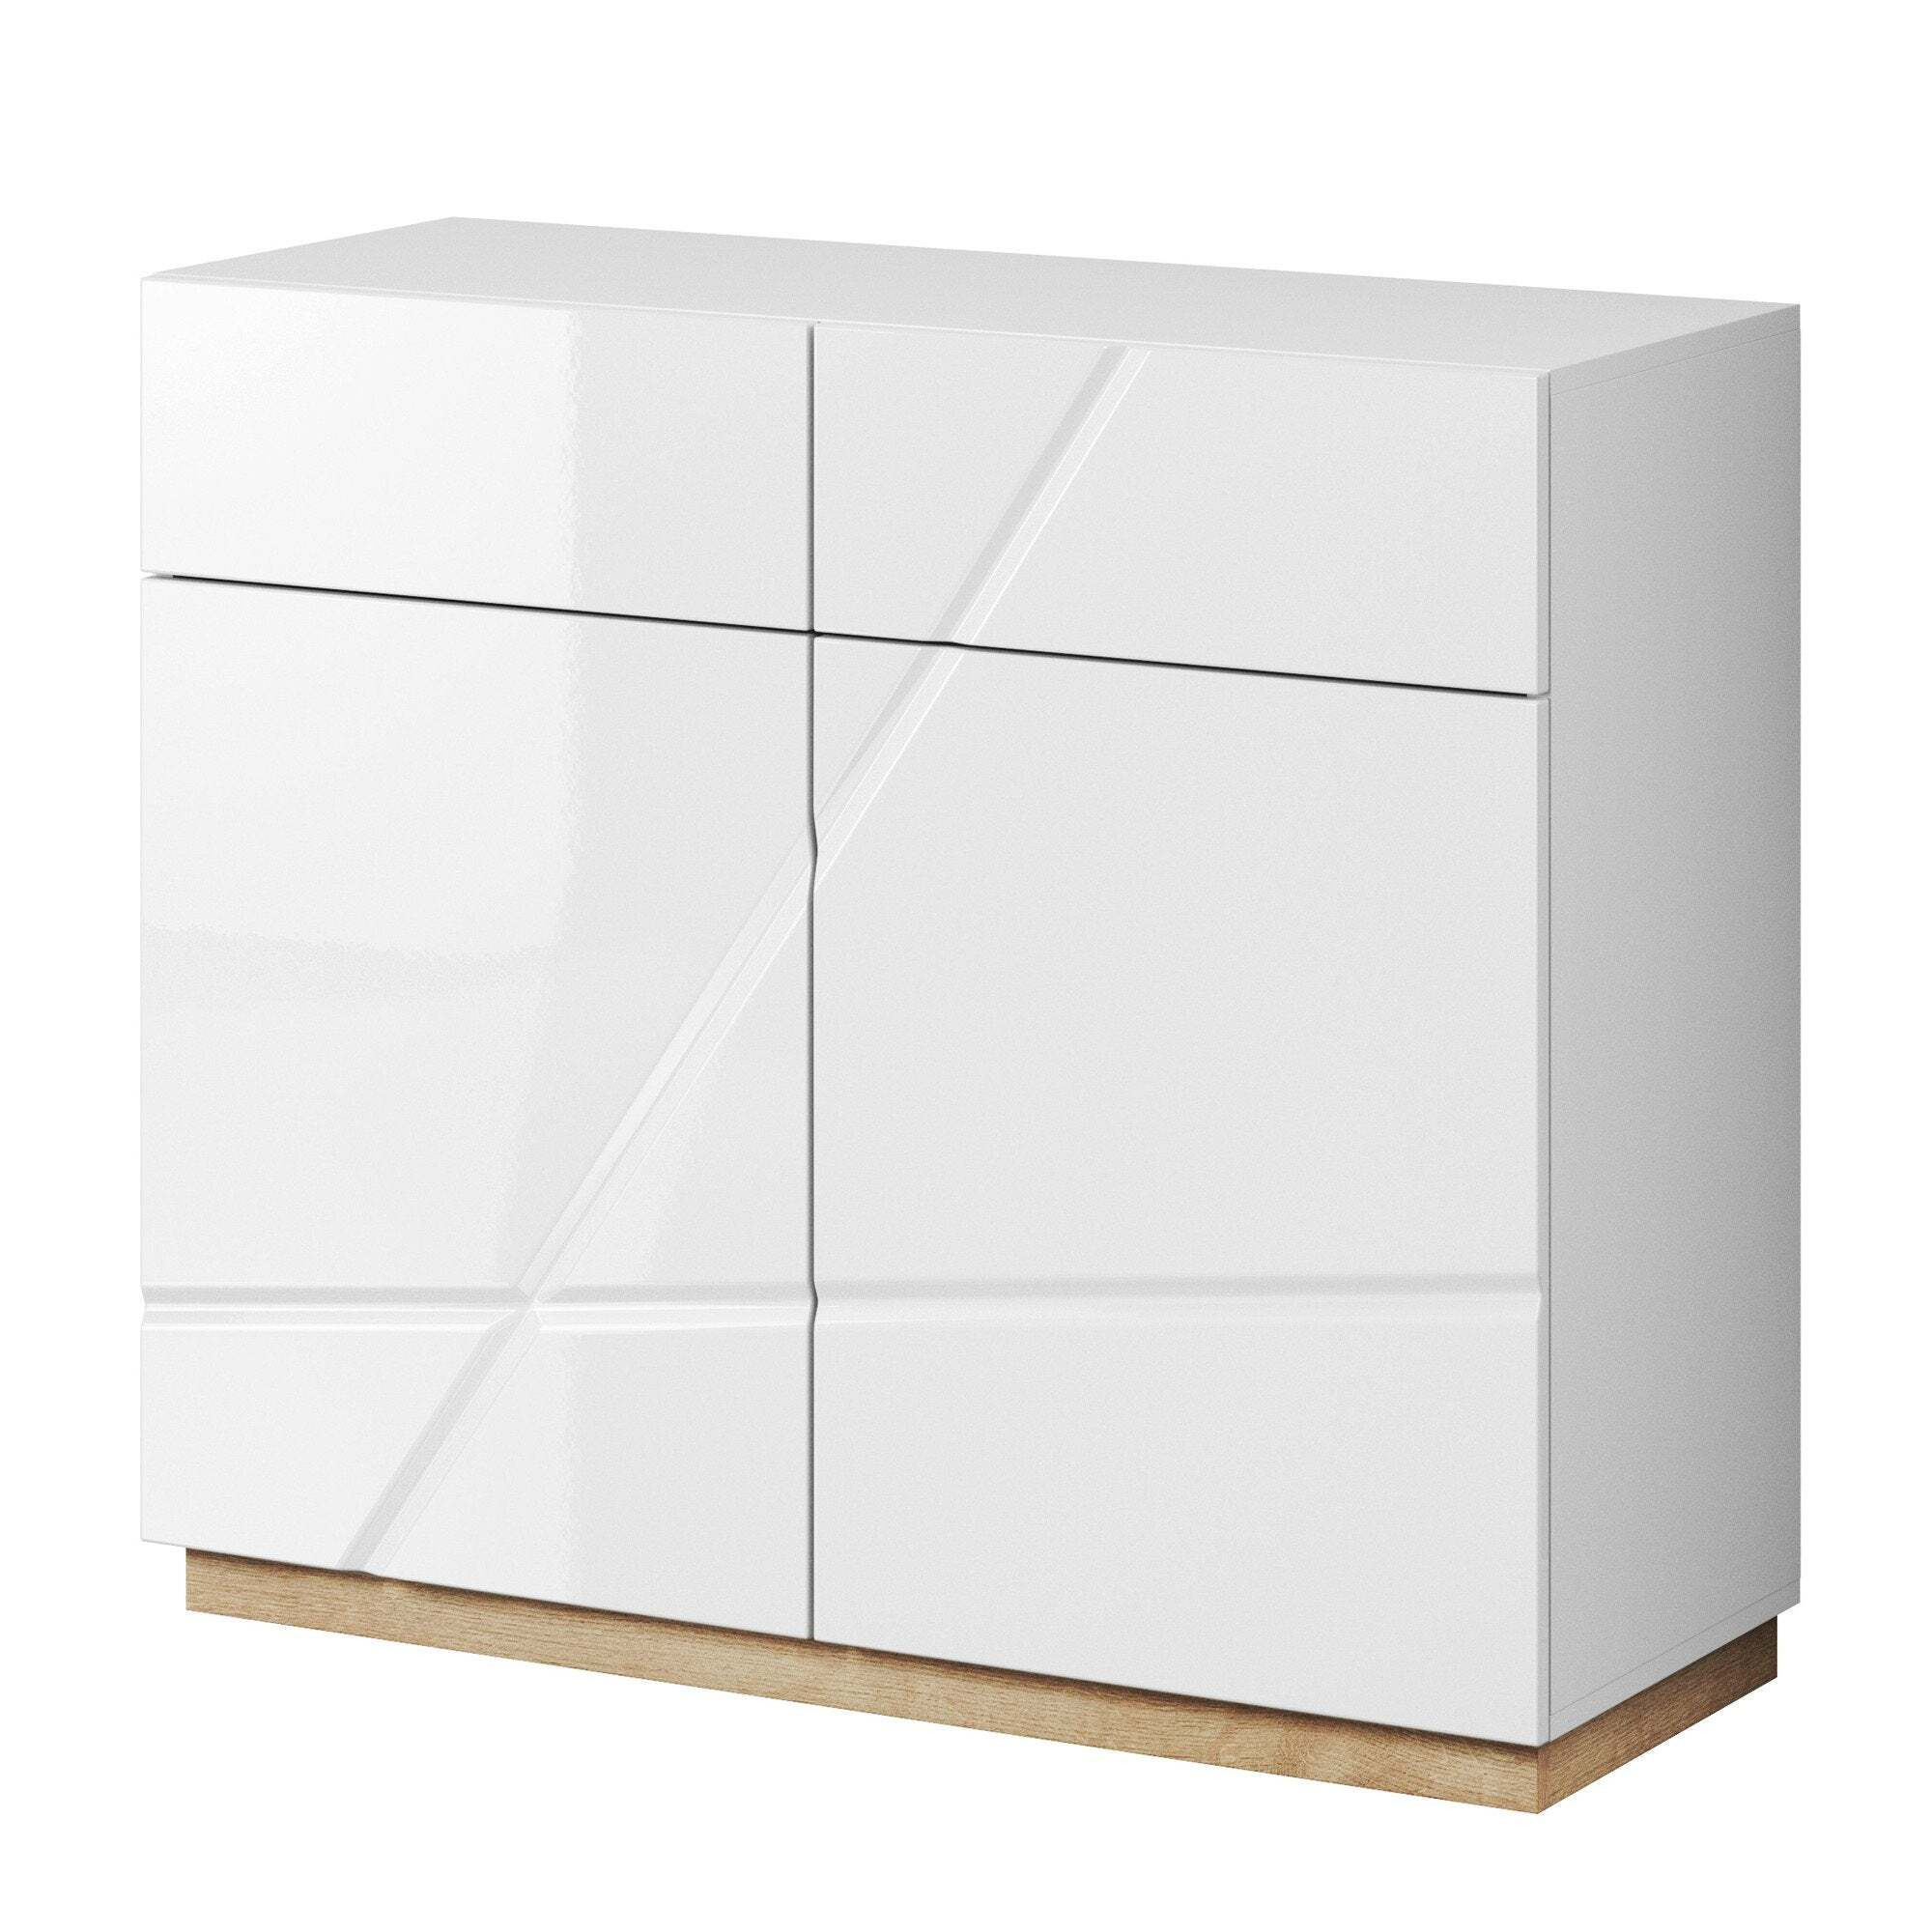 Futura FU-15 Sideboard Cabinet 100cm - White Gloss 100cm - image 1